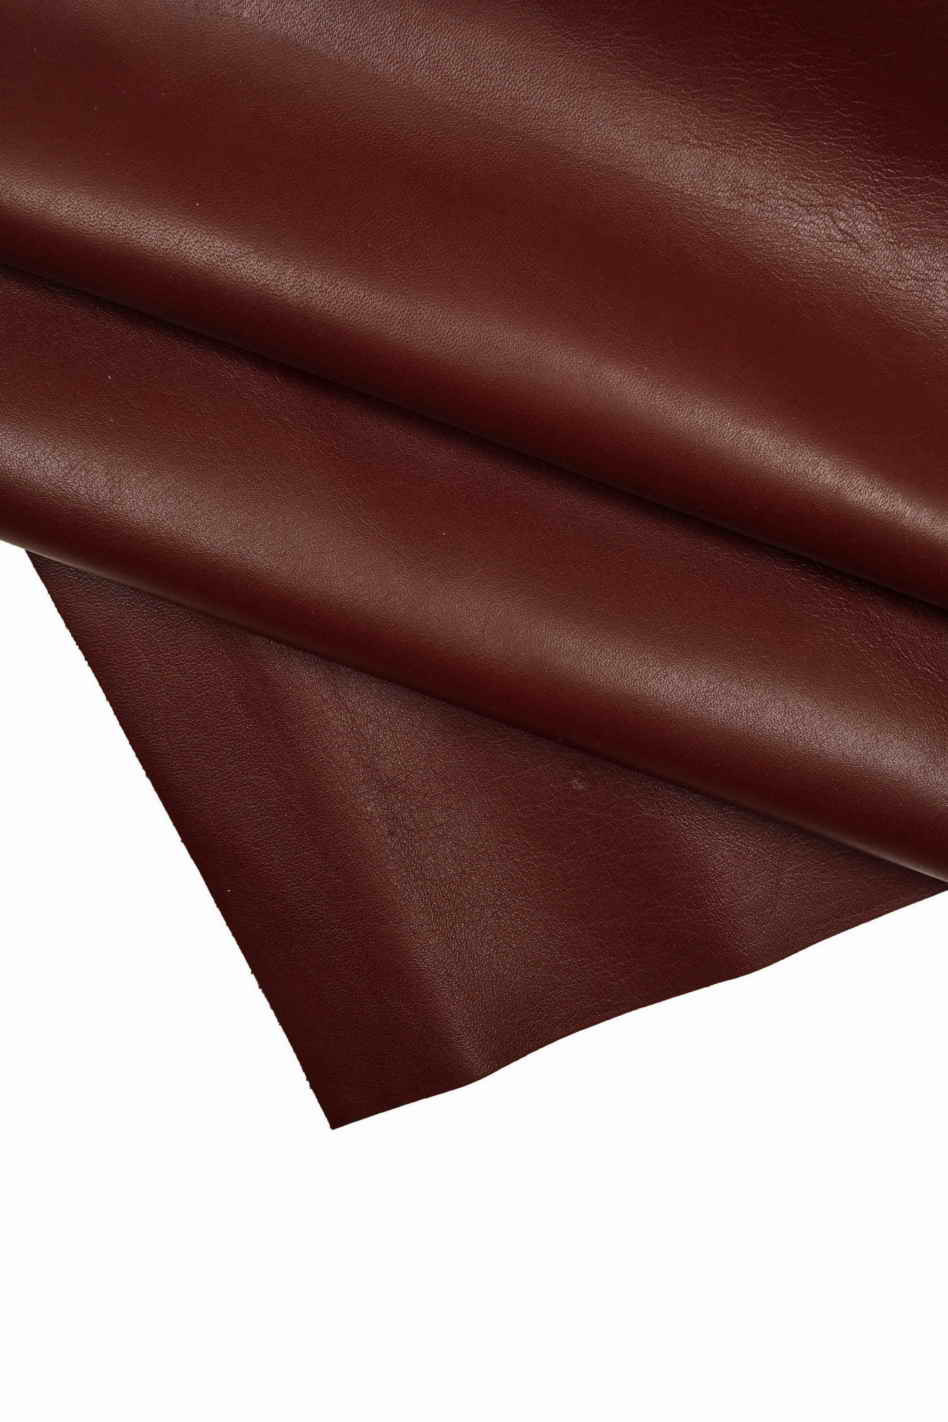 100% Genuine Calfskin Full Grain Leather. Each One Unique. Medium Tote Bag.